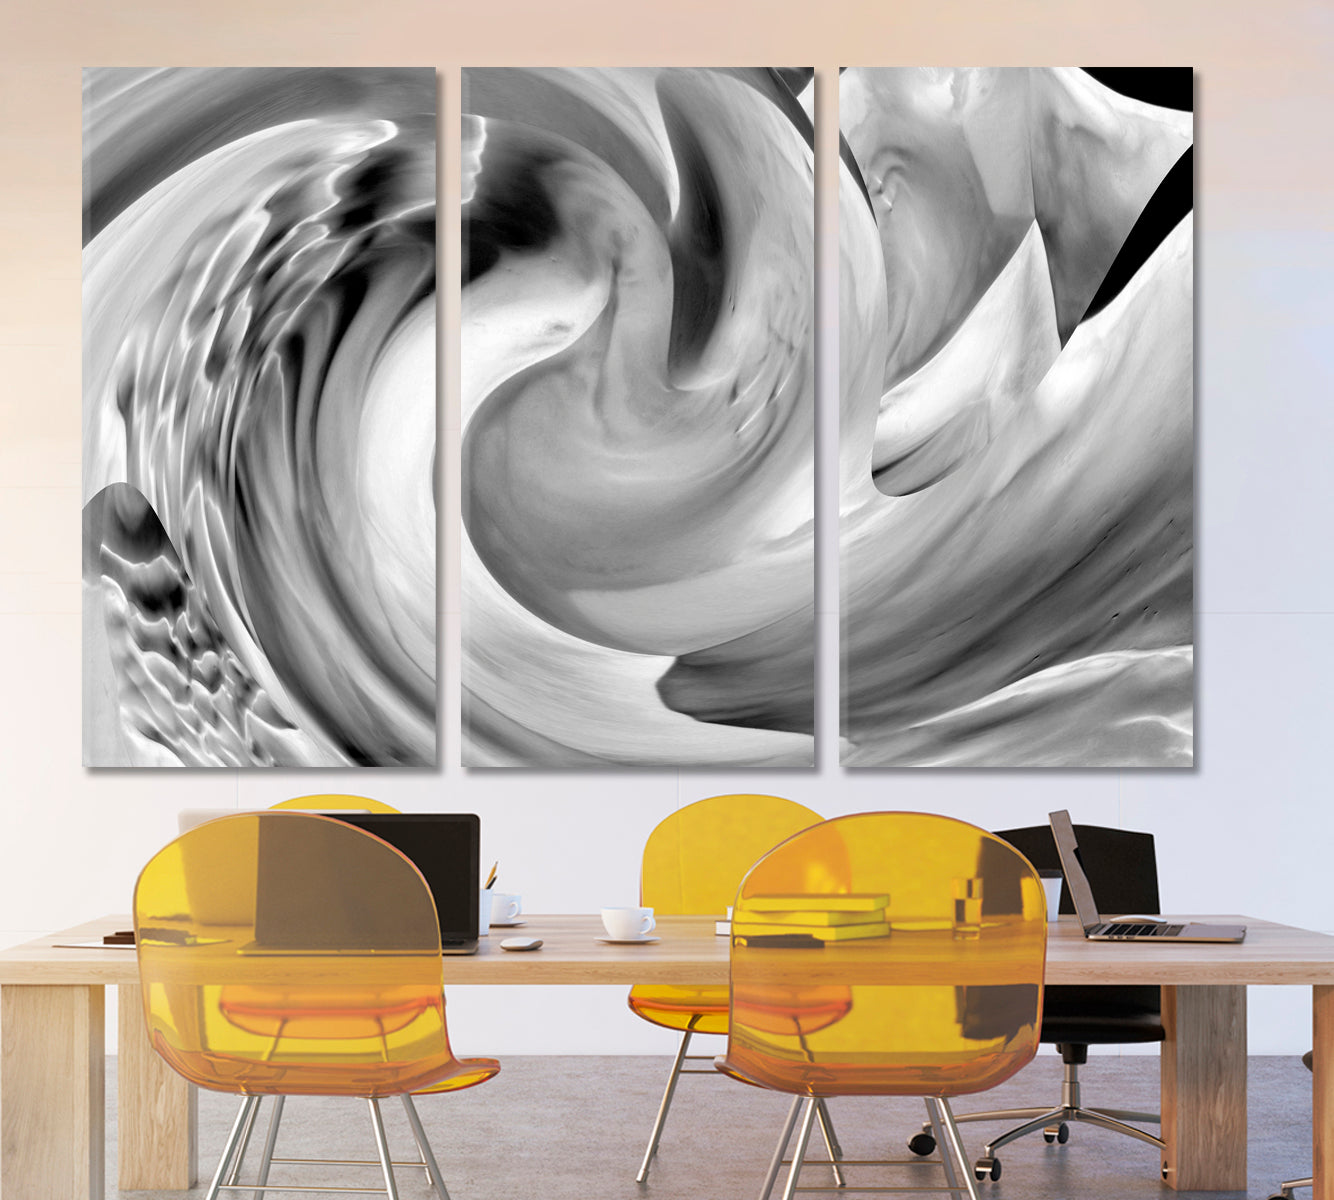 YIN YANG Symbol Vortex Abstract Wave B & W Black and White Wall Art Print Artesty 3 panels 36" x 24" 